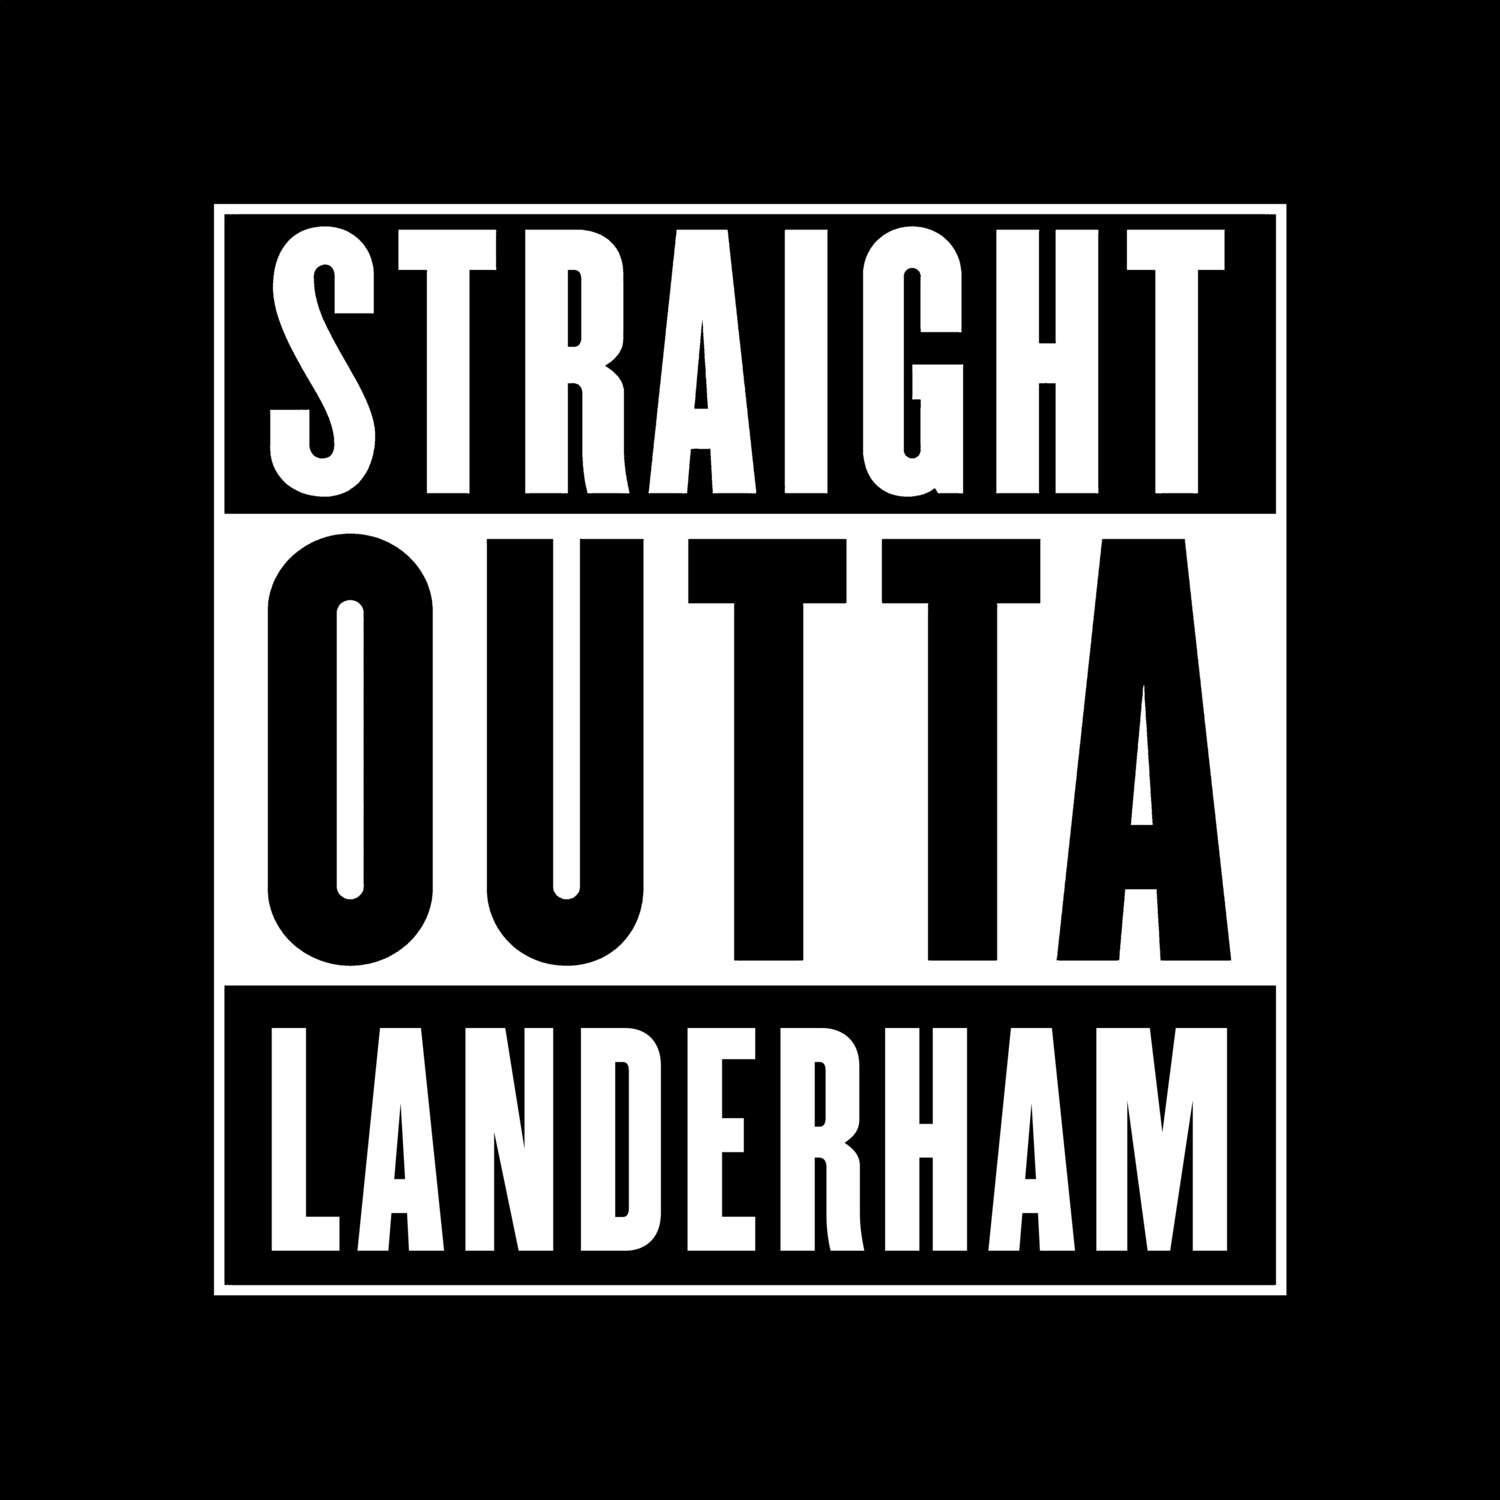 Landerham T-Shirt »Straight Outta«